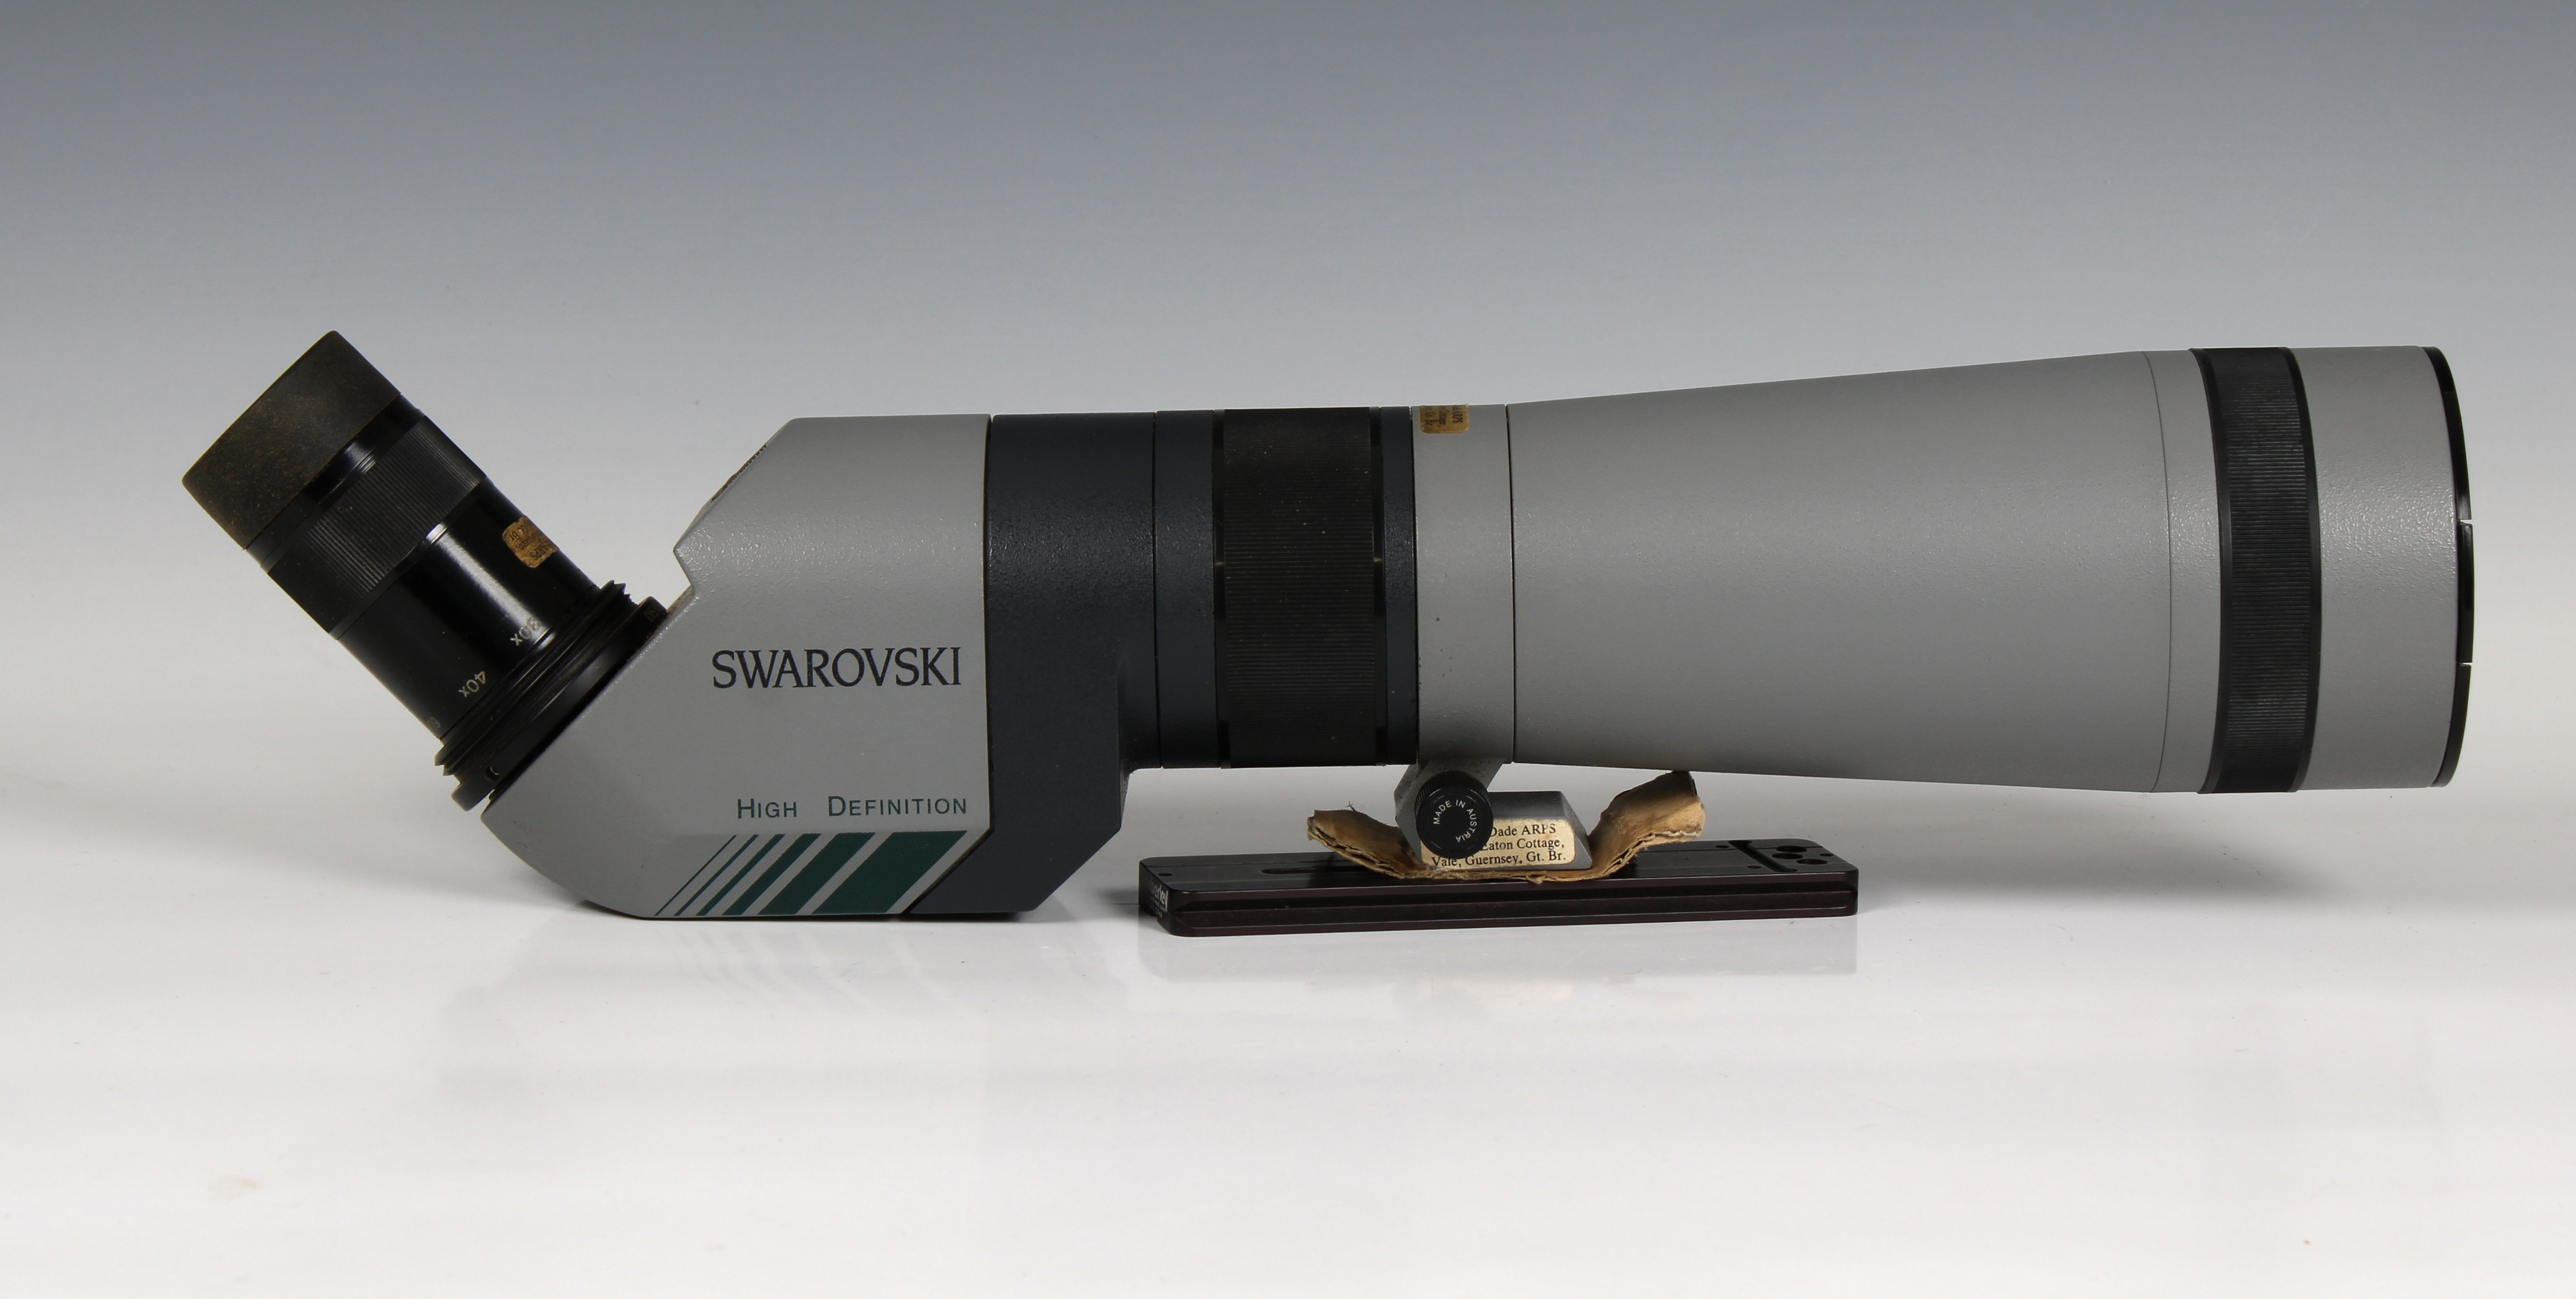 A Swarovski Habicht AT80 HD spotting scope. - Image 2 of 5